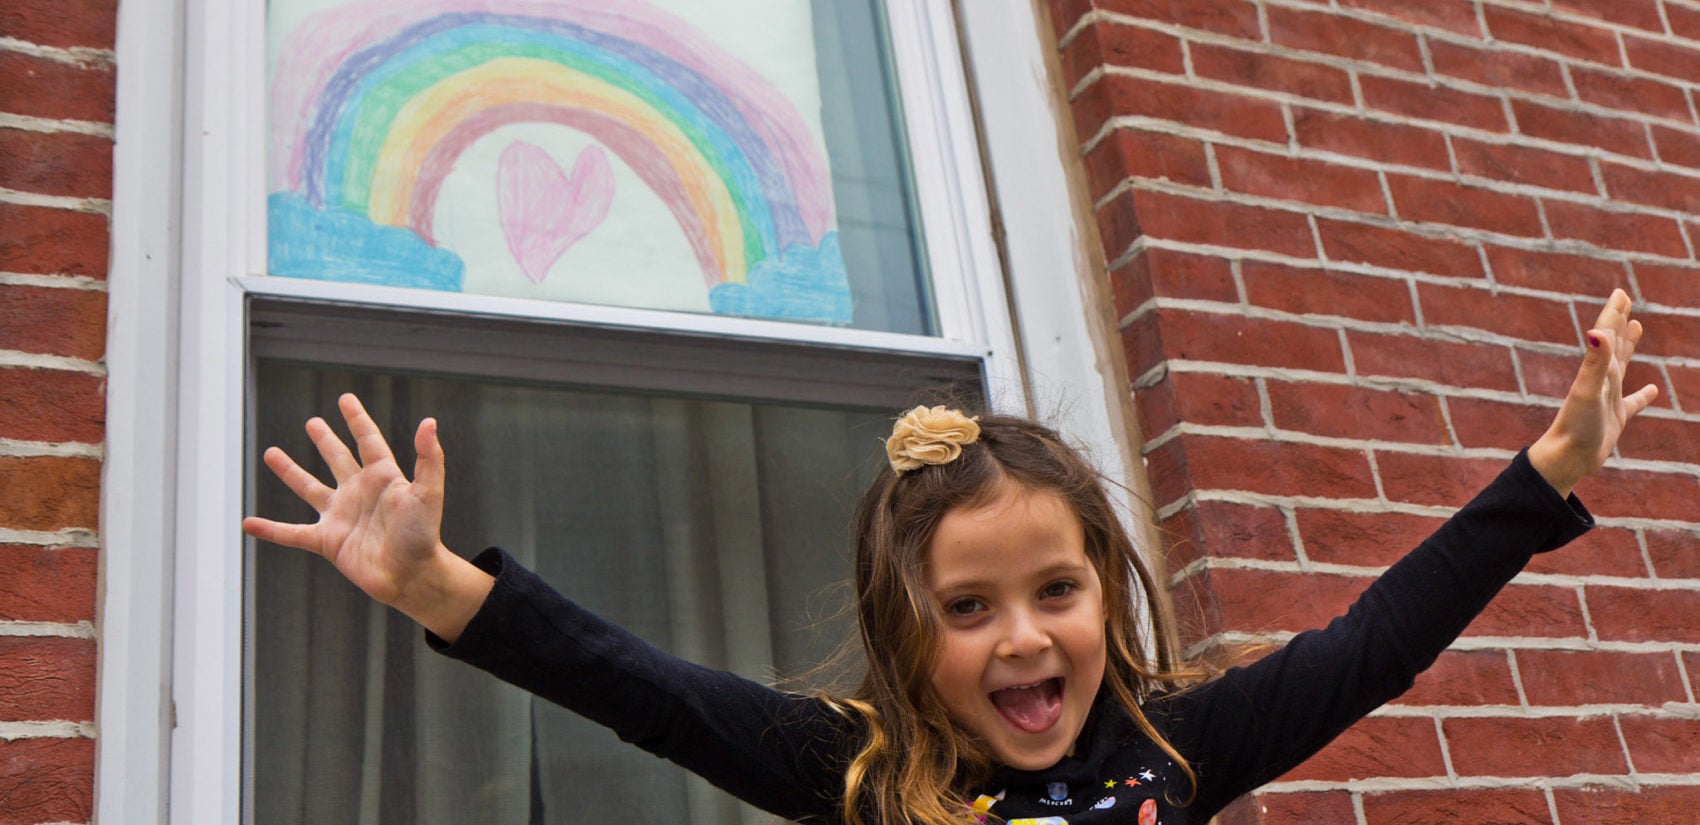 Bowie Moon Porter drew this rainbow for other kids on the rainbow hunt through Philadelphia’s Fishtown neighborhood. (Kimberly Paynter/WHYY)